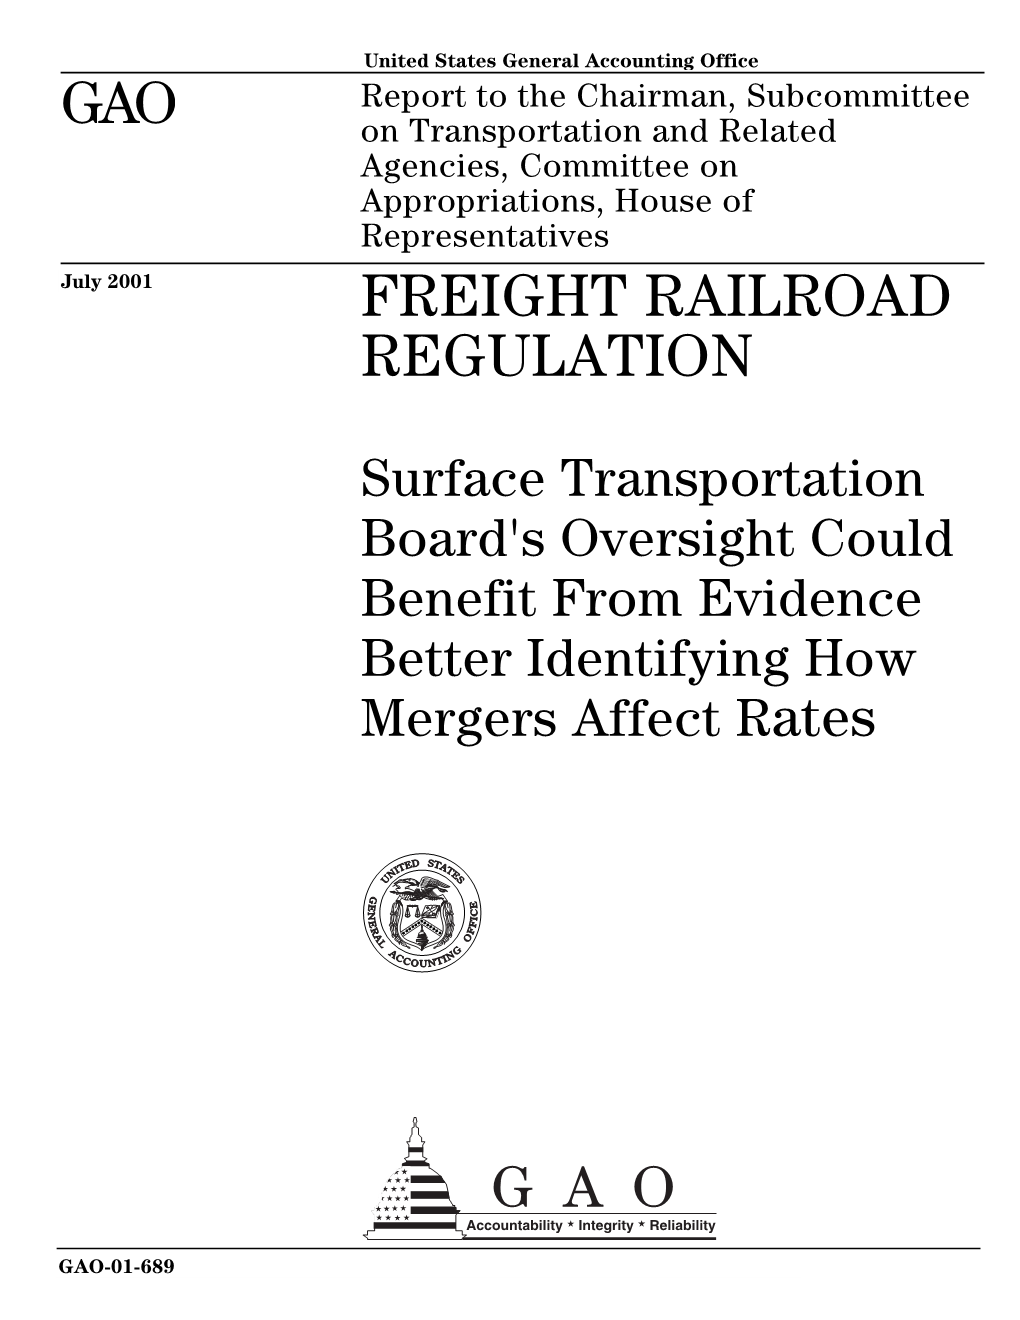 GAO-01-689 Freight Railroad Regulation: Surface Transportation